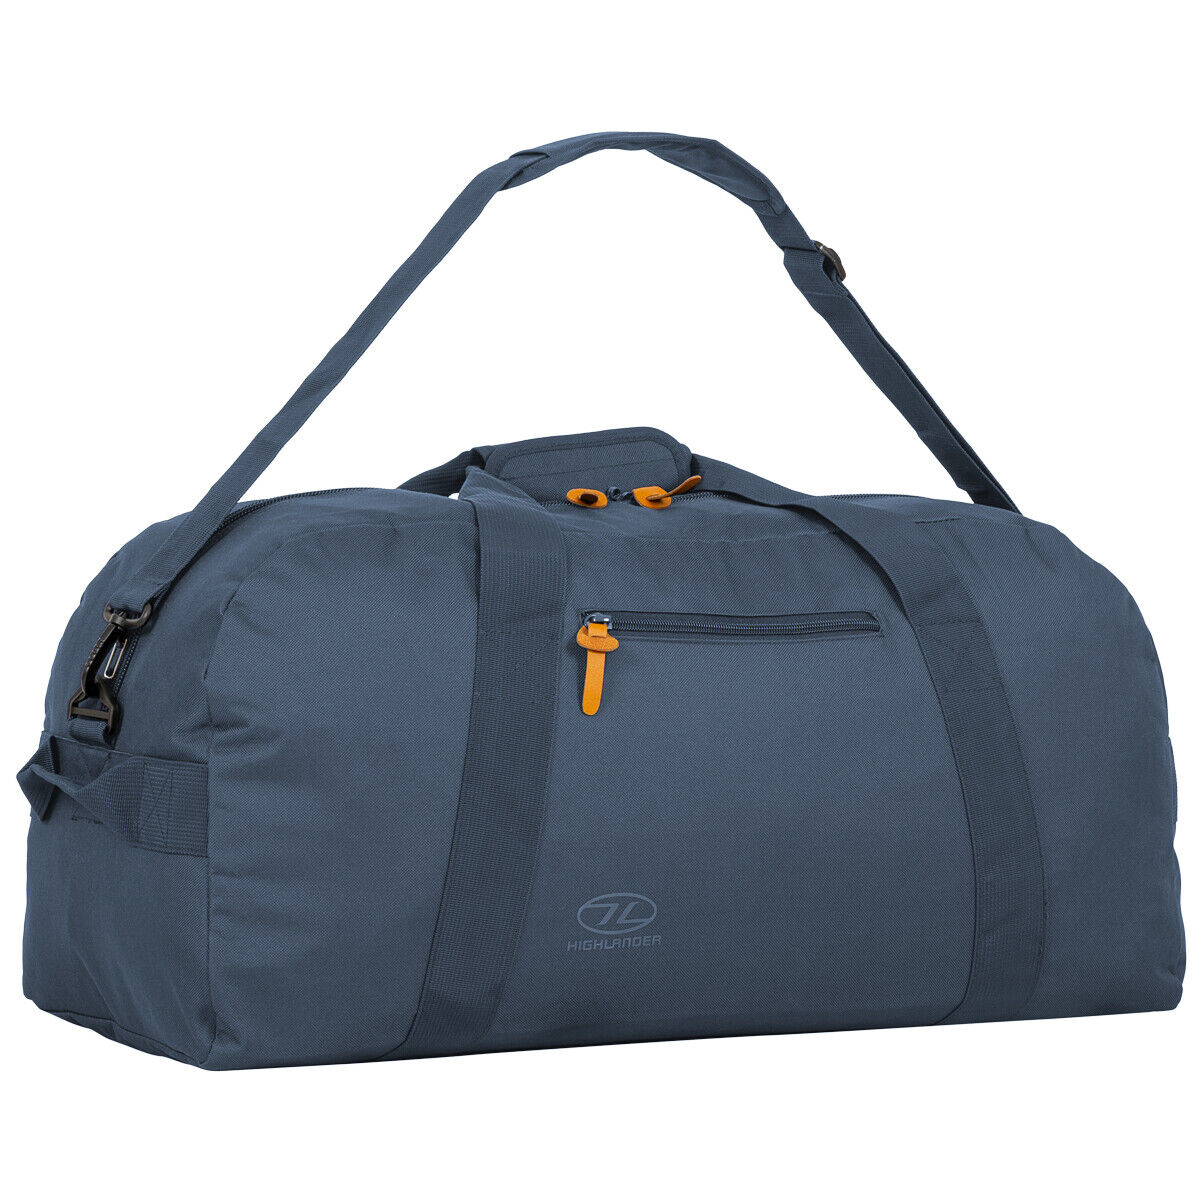 Highlander Cargo Bag 65L Lightweight Cabin Gym Weekend Luggage Travel Denim Blue